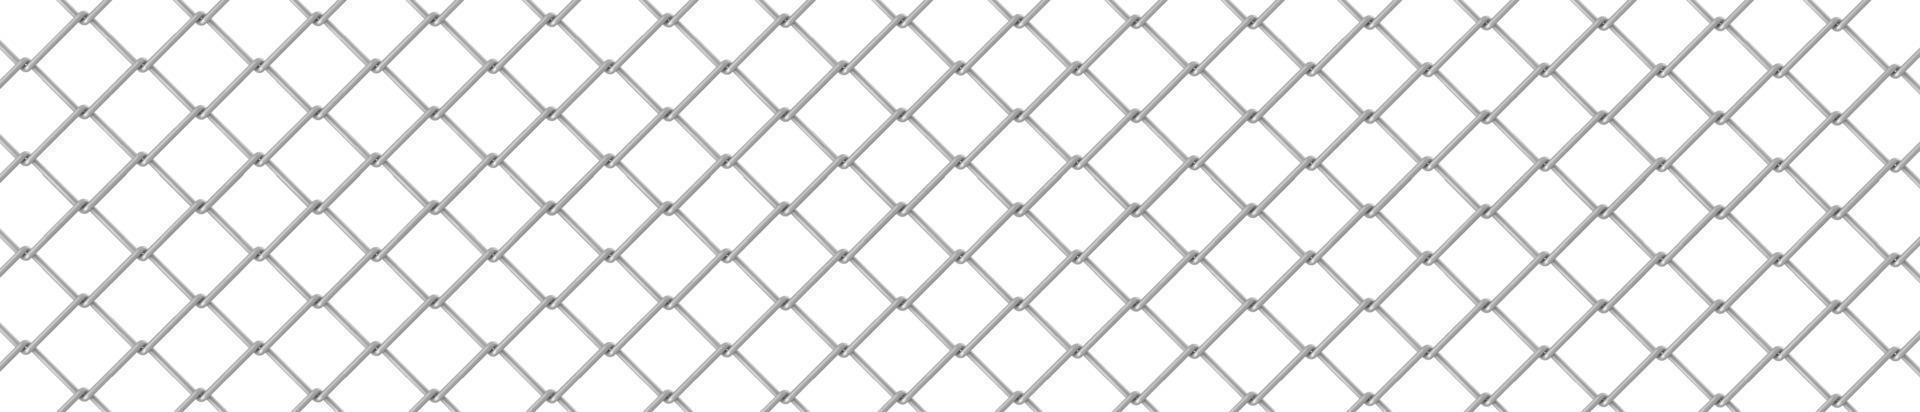 Metal fence mesh, pattern steel wire grid vector